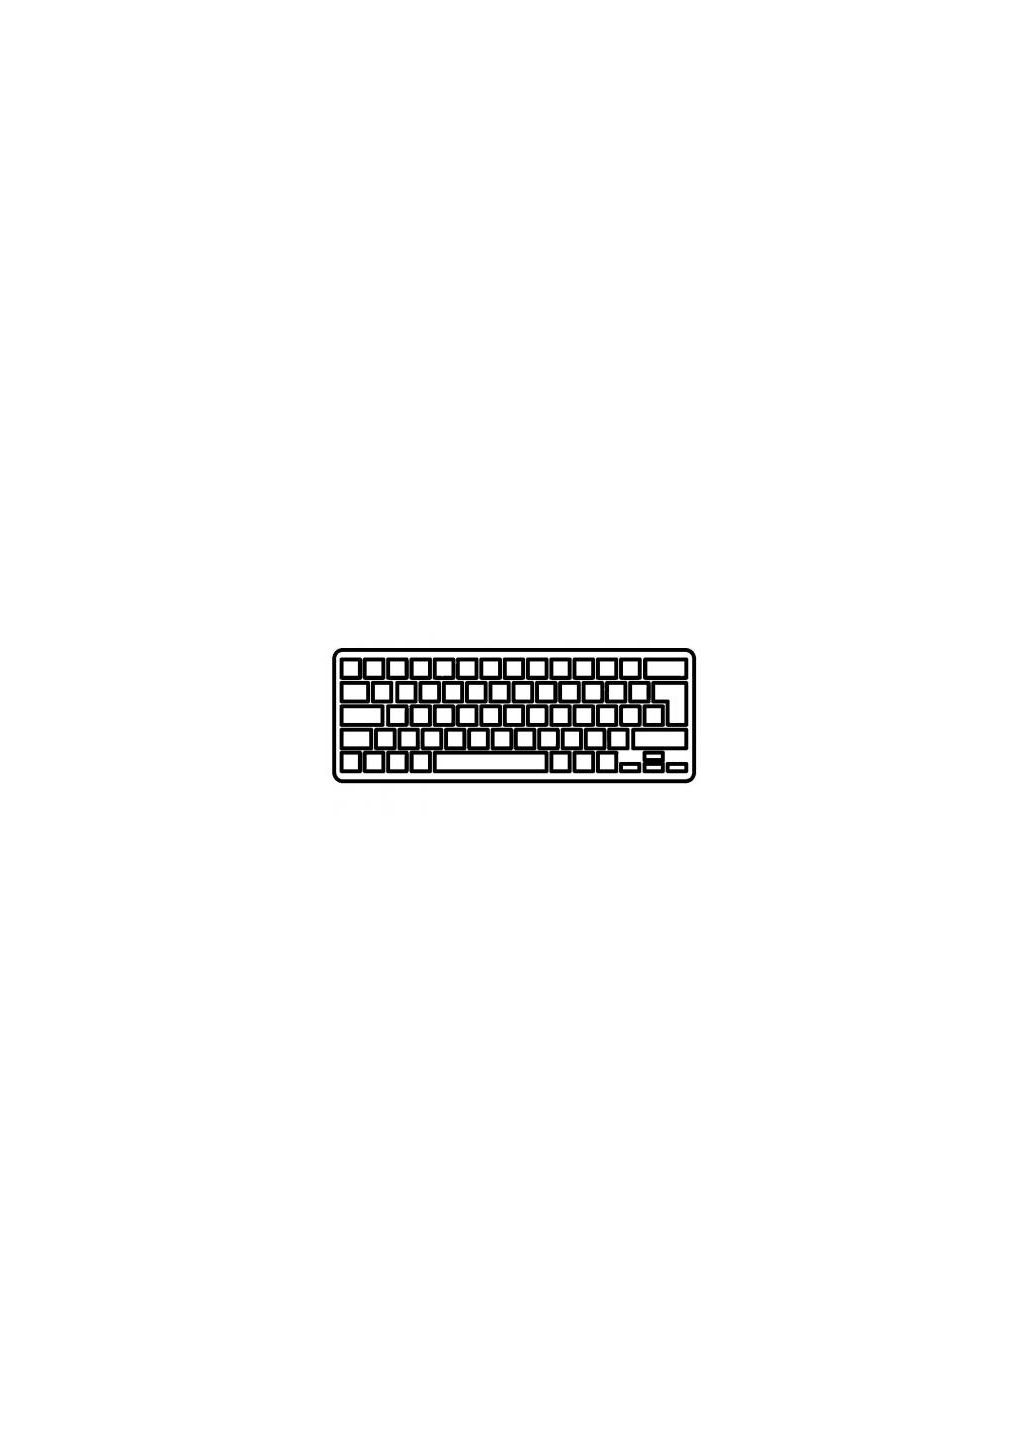 Клавиатура ноутбука XNOTE P510 светлосерая RU (A43587) LG xnote p510 светло-серая ru (276707437)